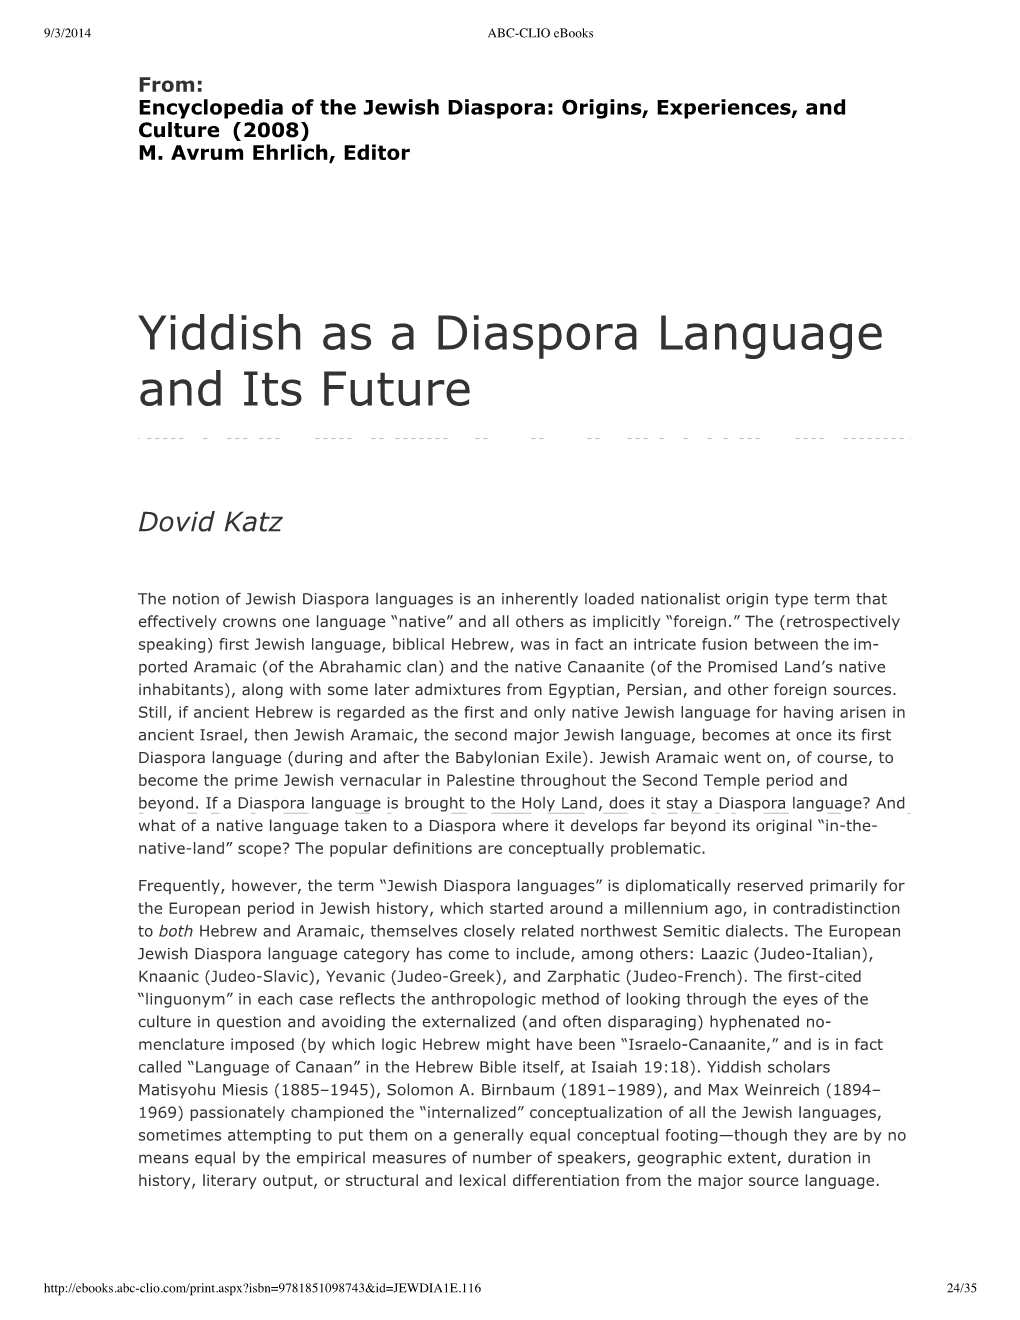 Yiddish As a Diaspora Language and Its Future